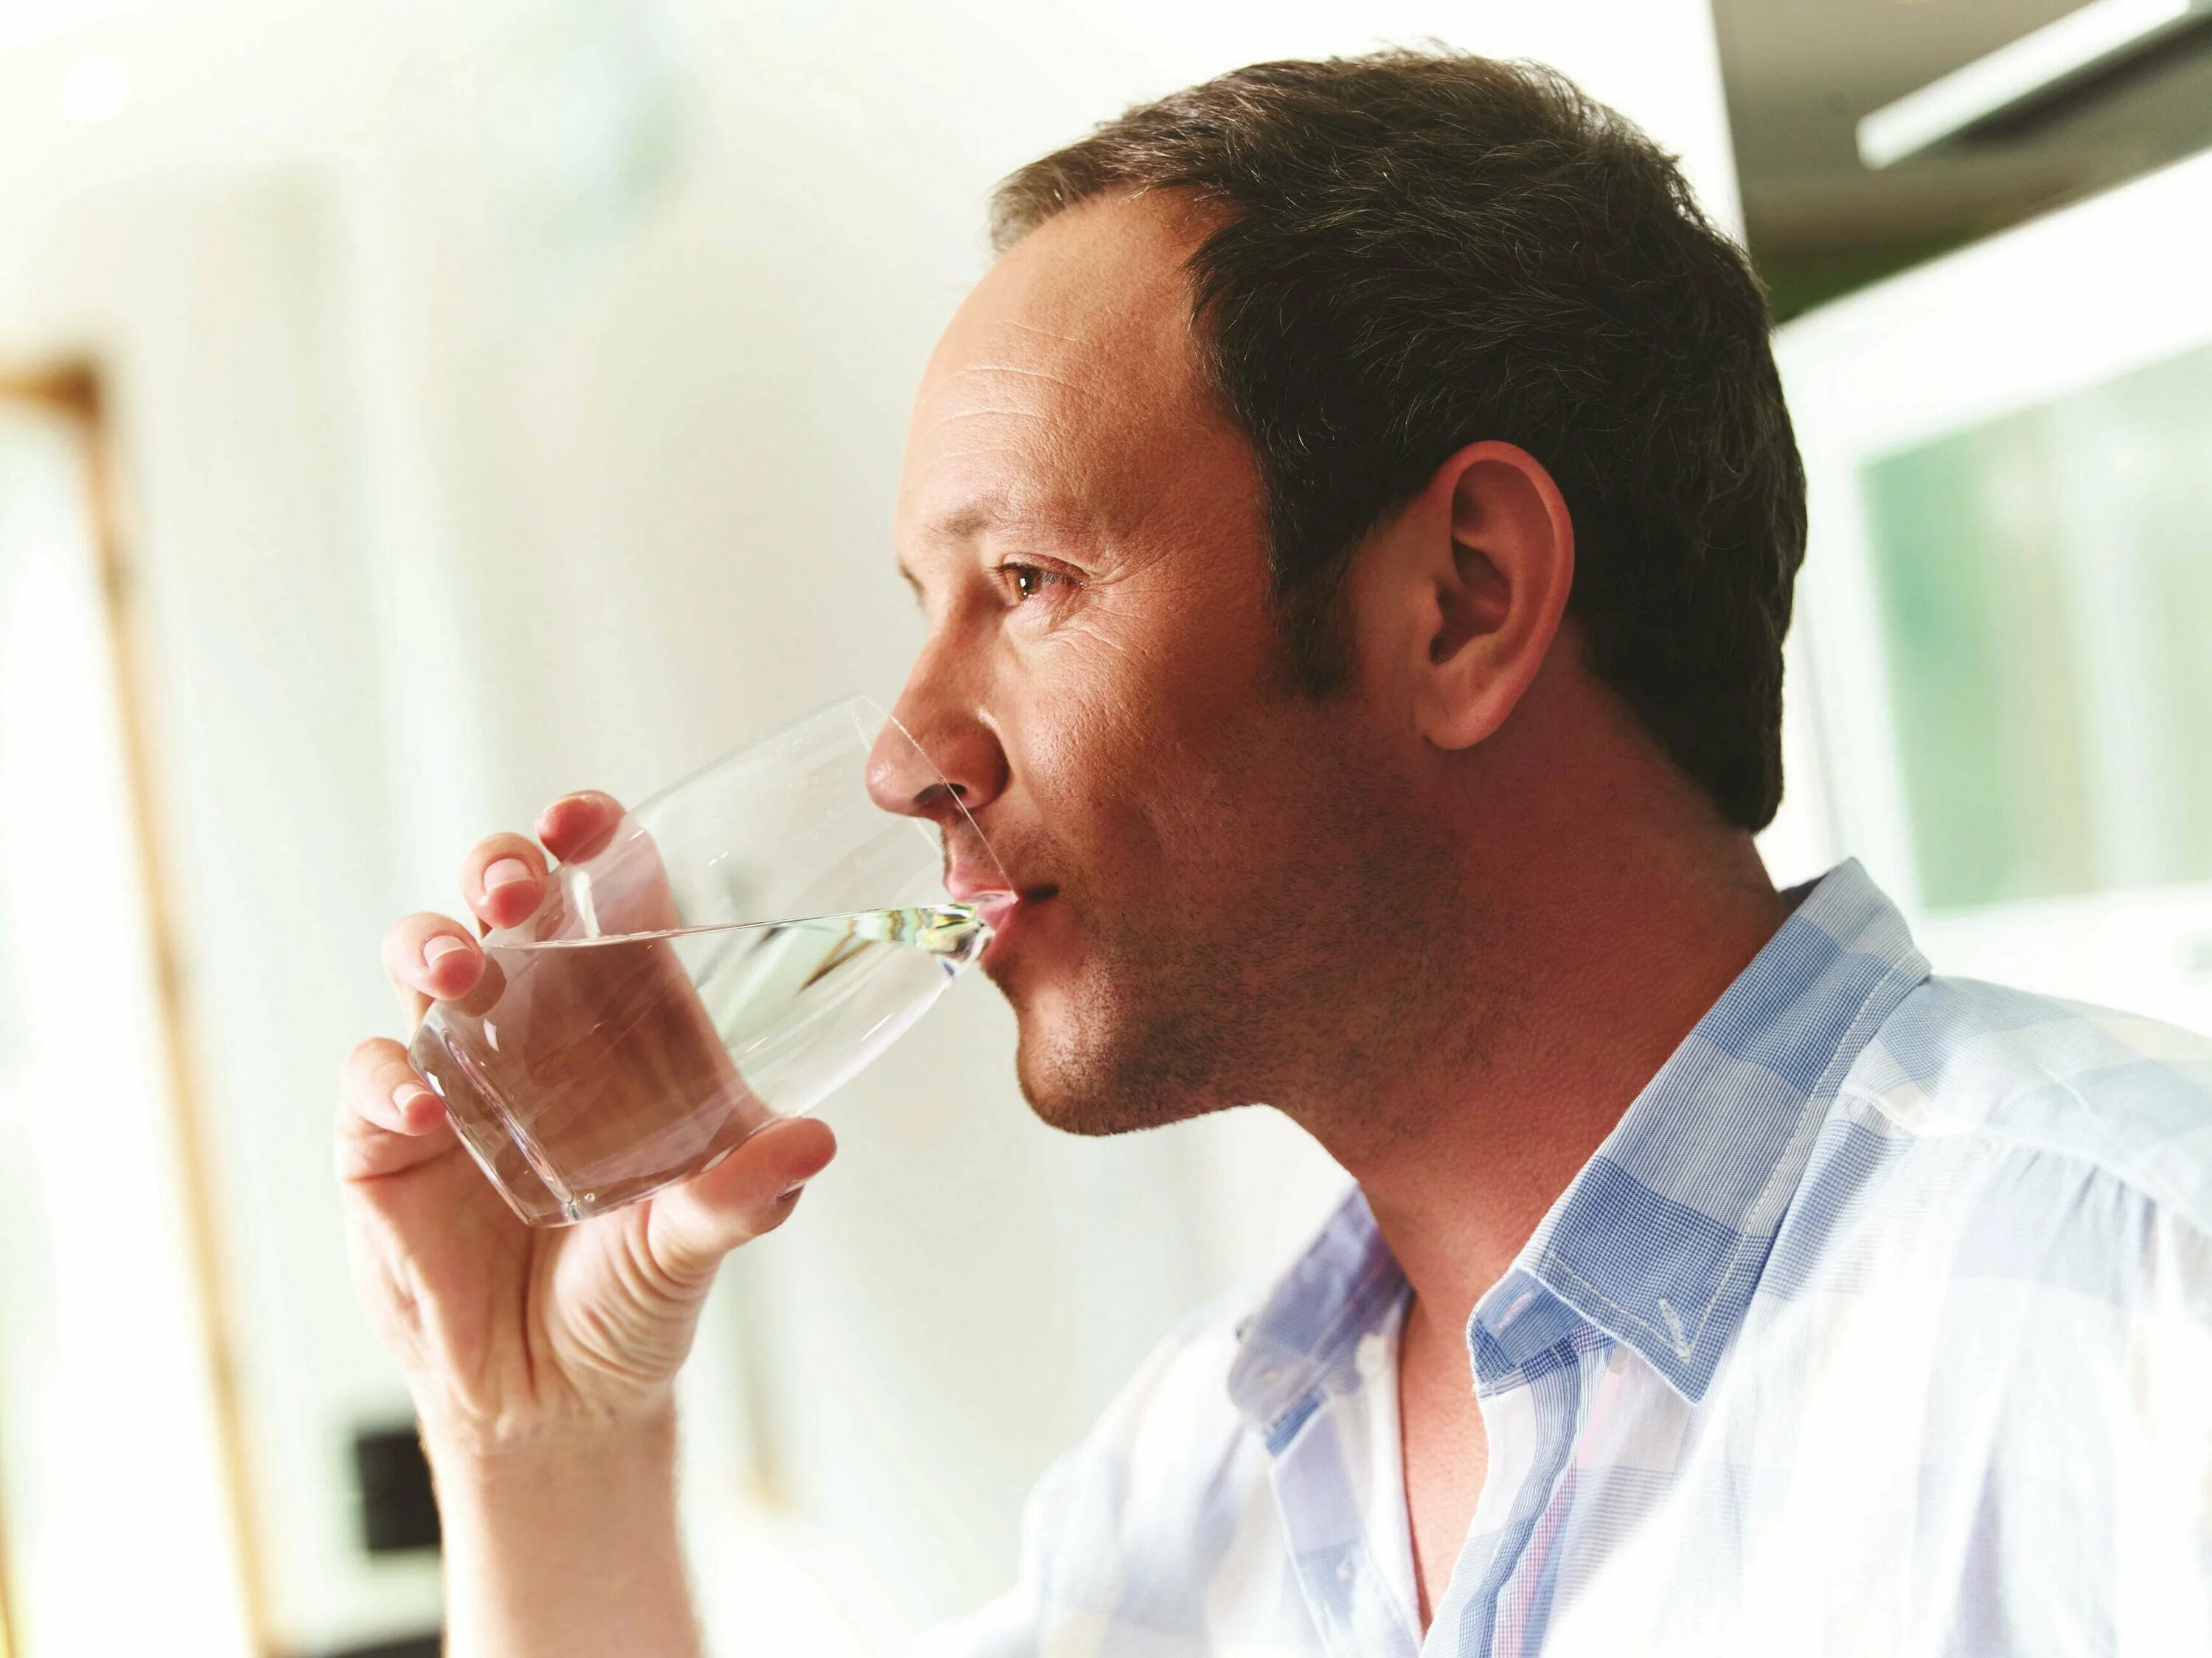 Мужчина пьет воду. Мужчина пьет воду из стакана. Пьет из стакана. Мужчина со стаканом воды.